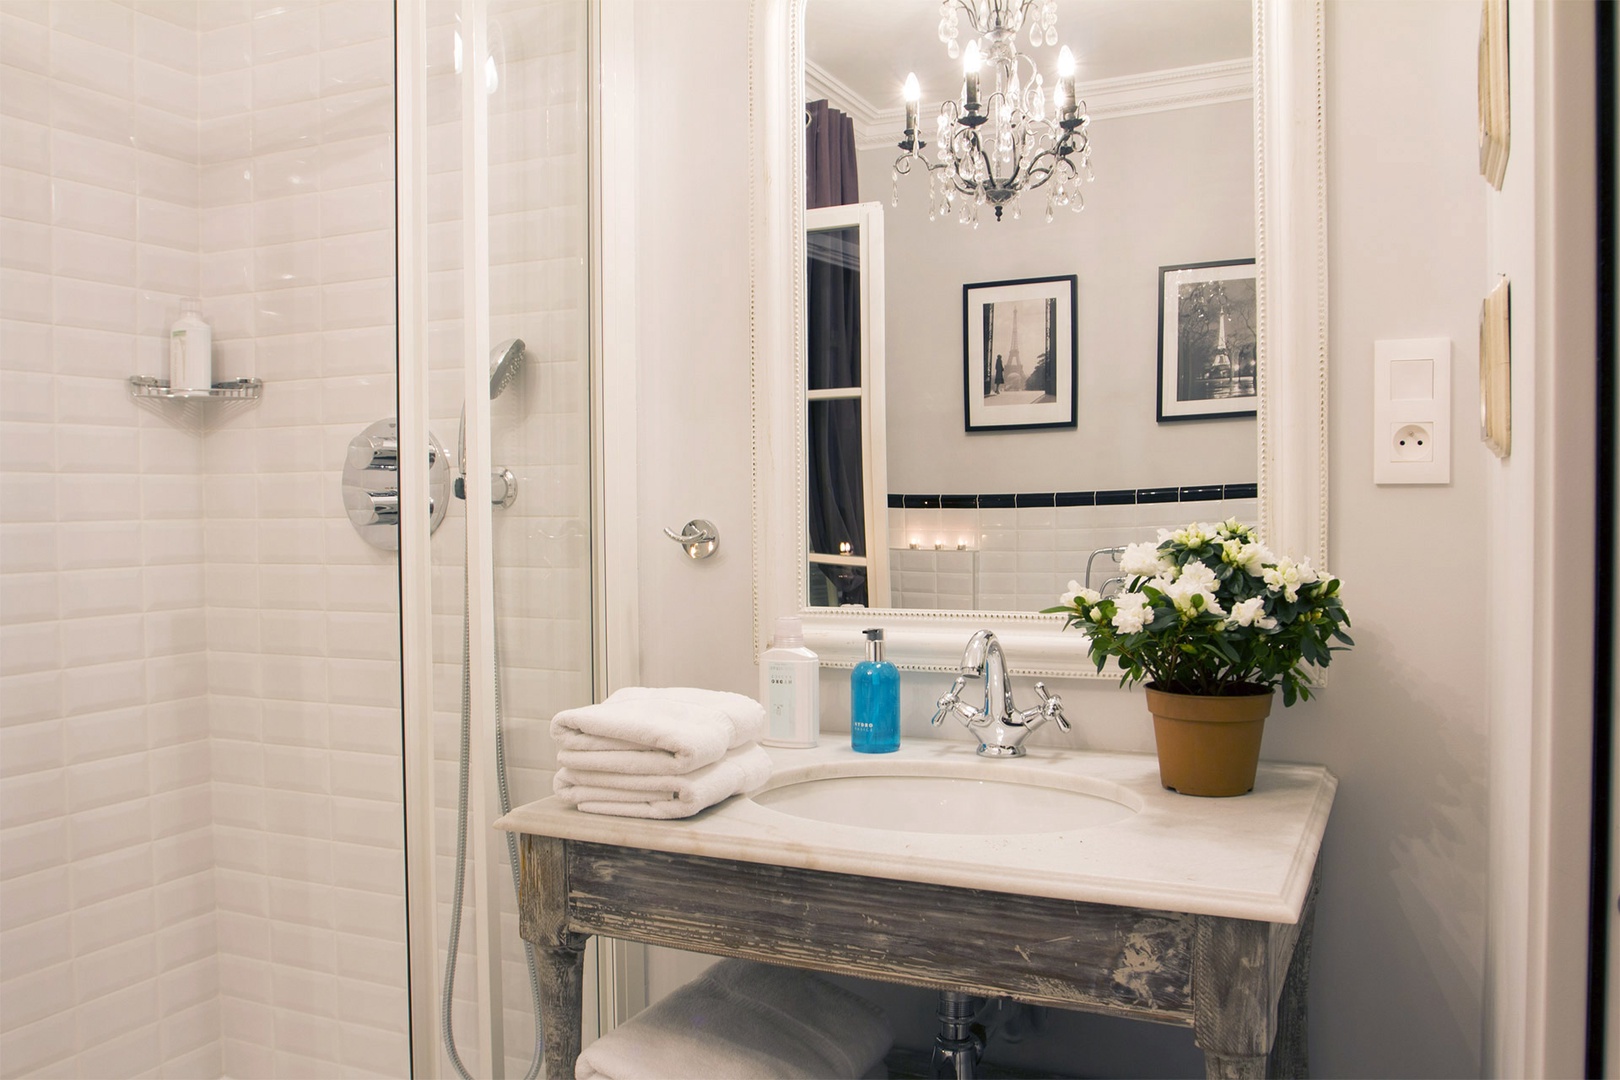 Pamper yourself in this elegant, romantic bathroom.